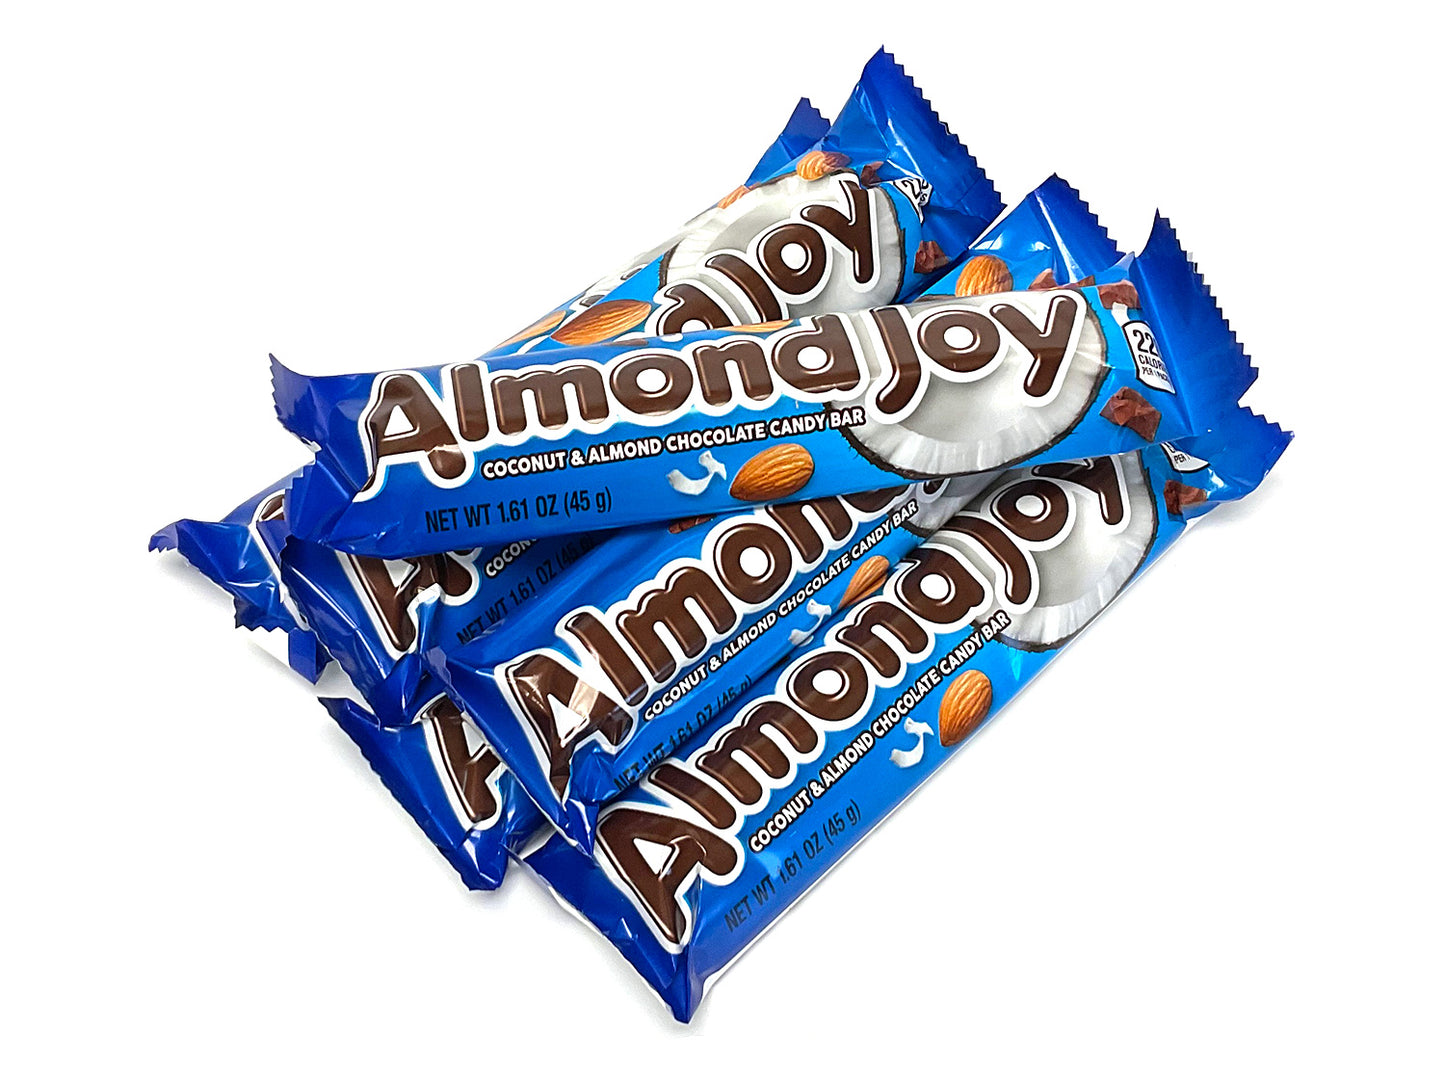 Almond Joy - 1.61 oz bar - 6 bars